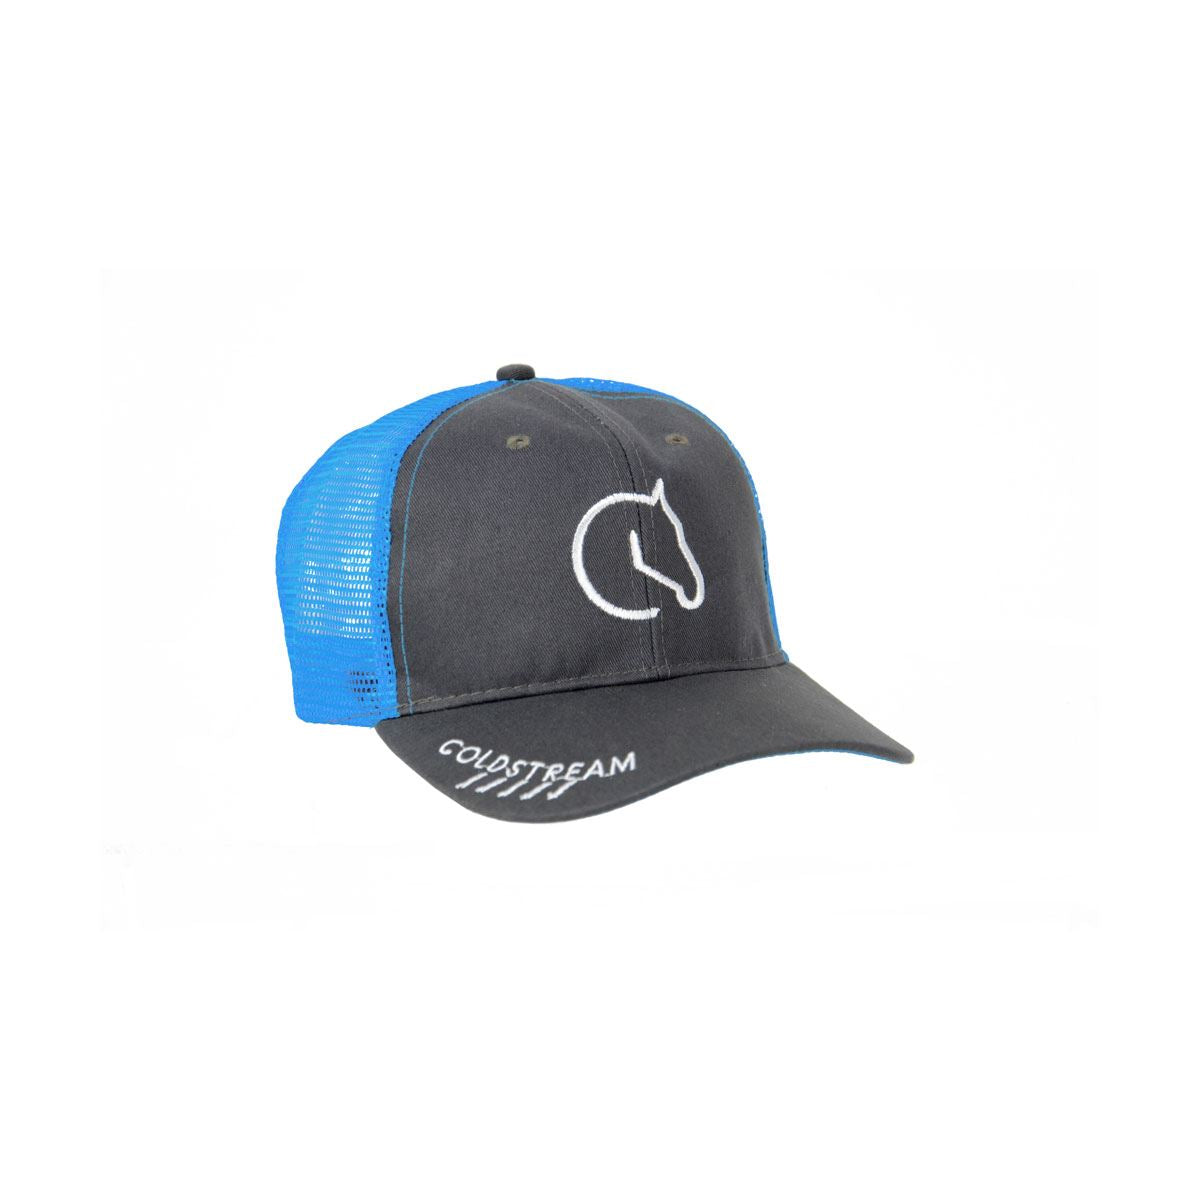 Coldstream Baseball Cap - Just Horse Riders